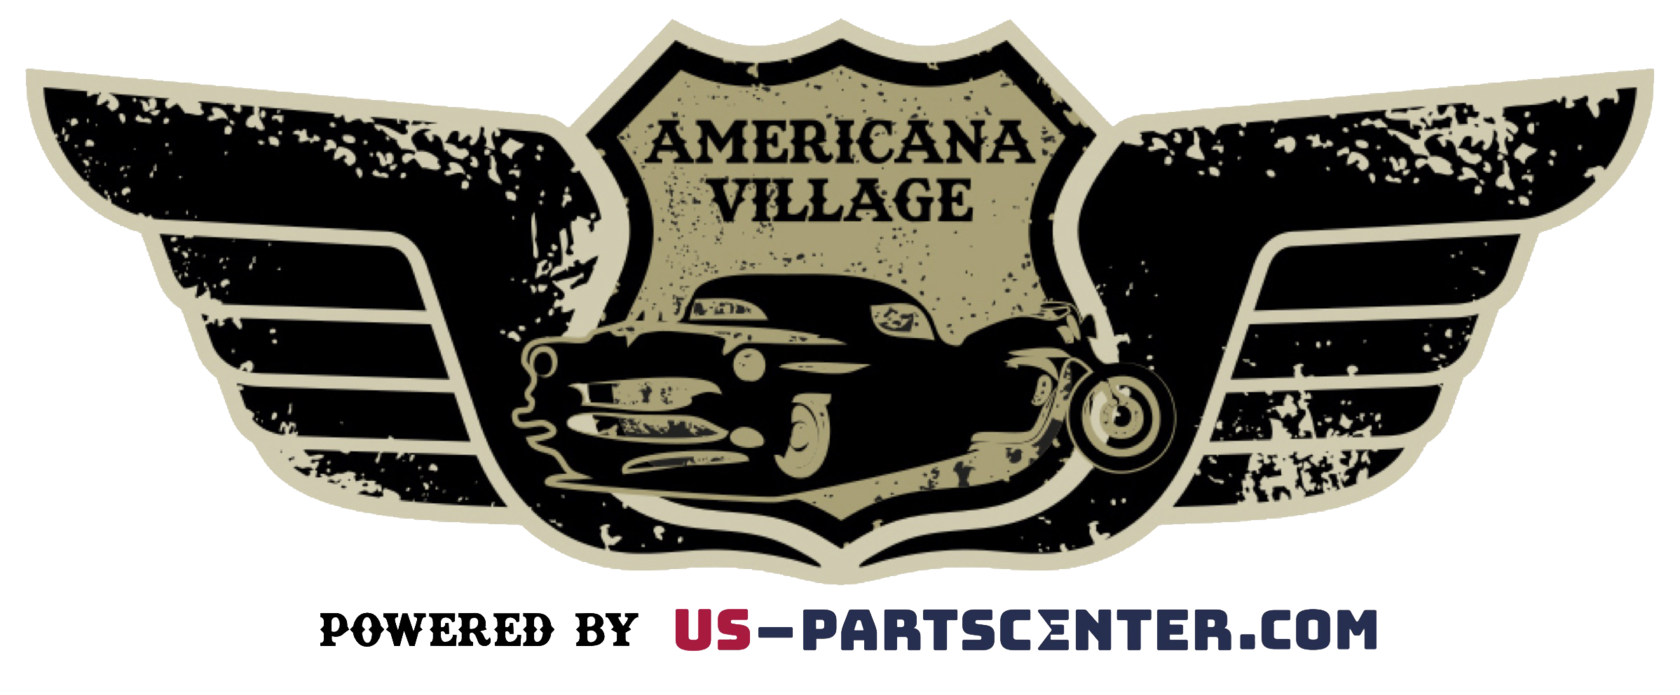 Americana Village